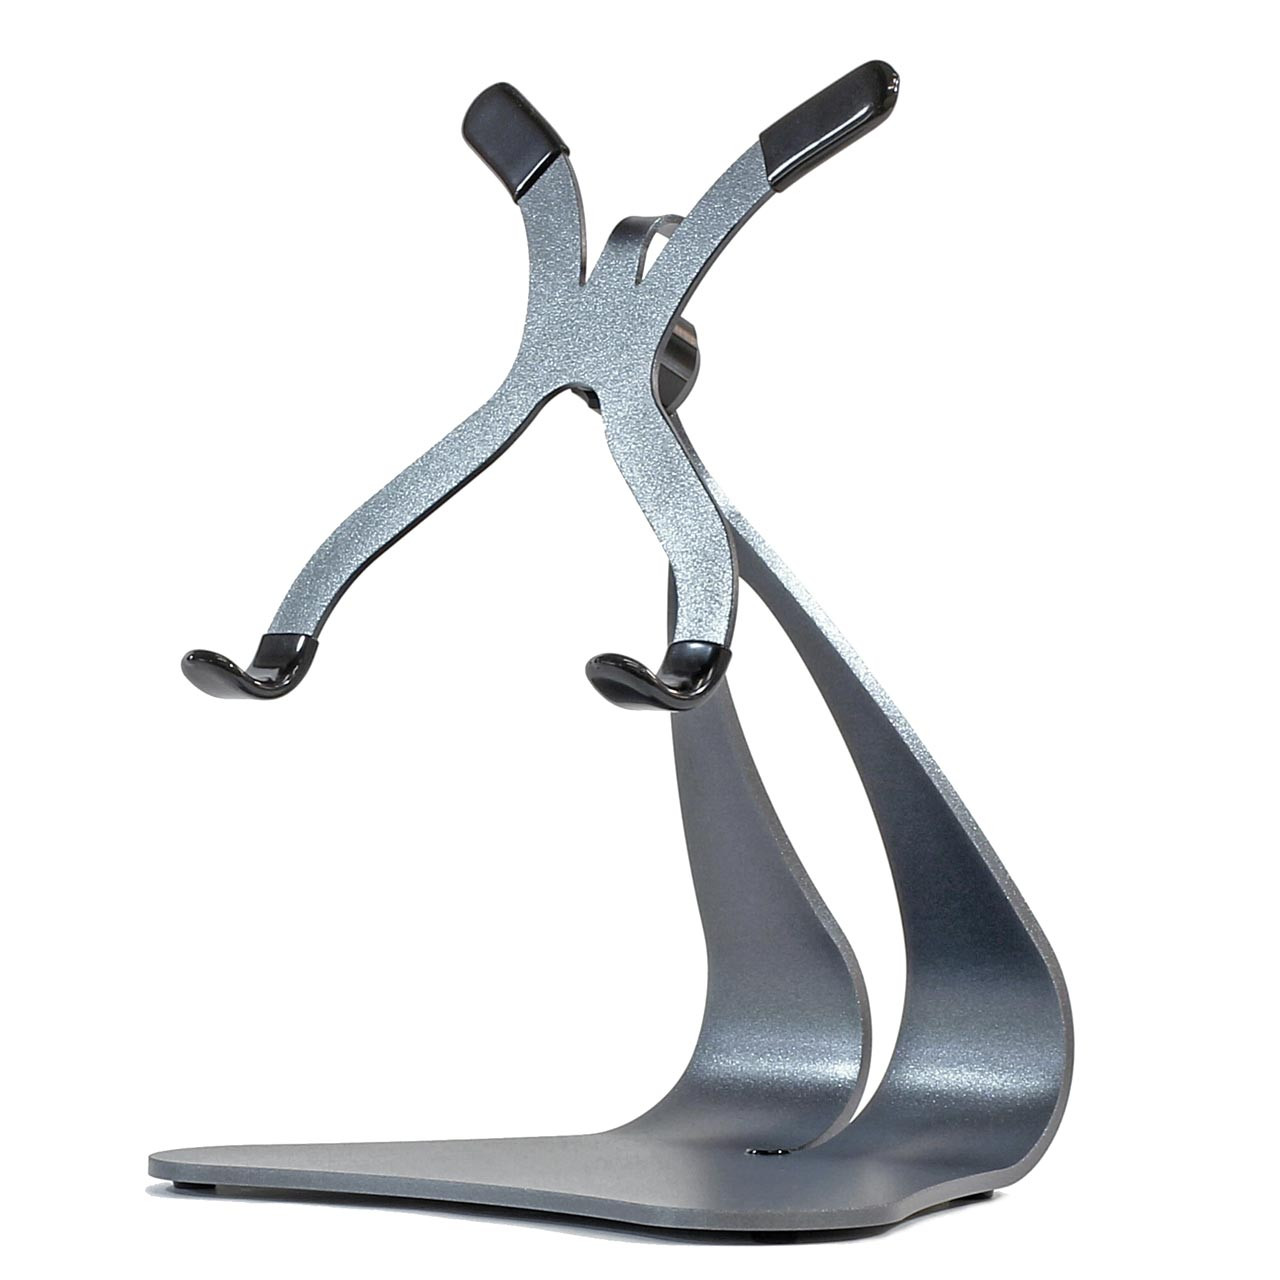 Stabile Pro Pivoting iPad Steel Stand Sturdy Ergonomic